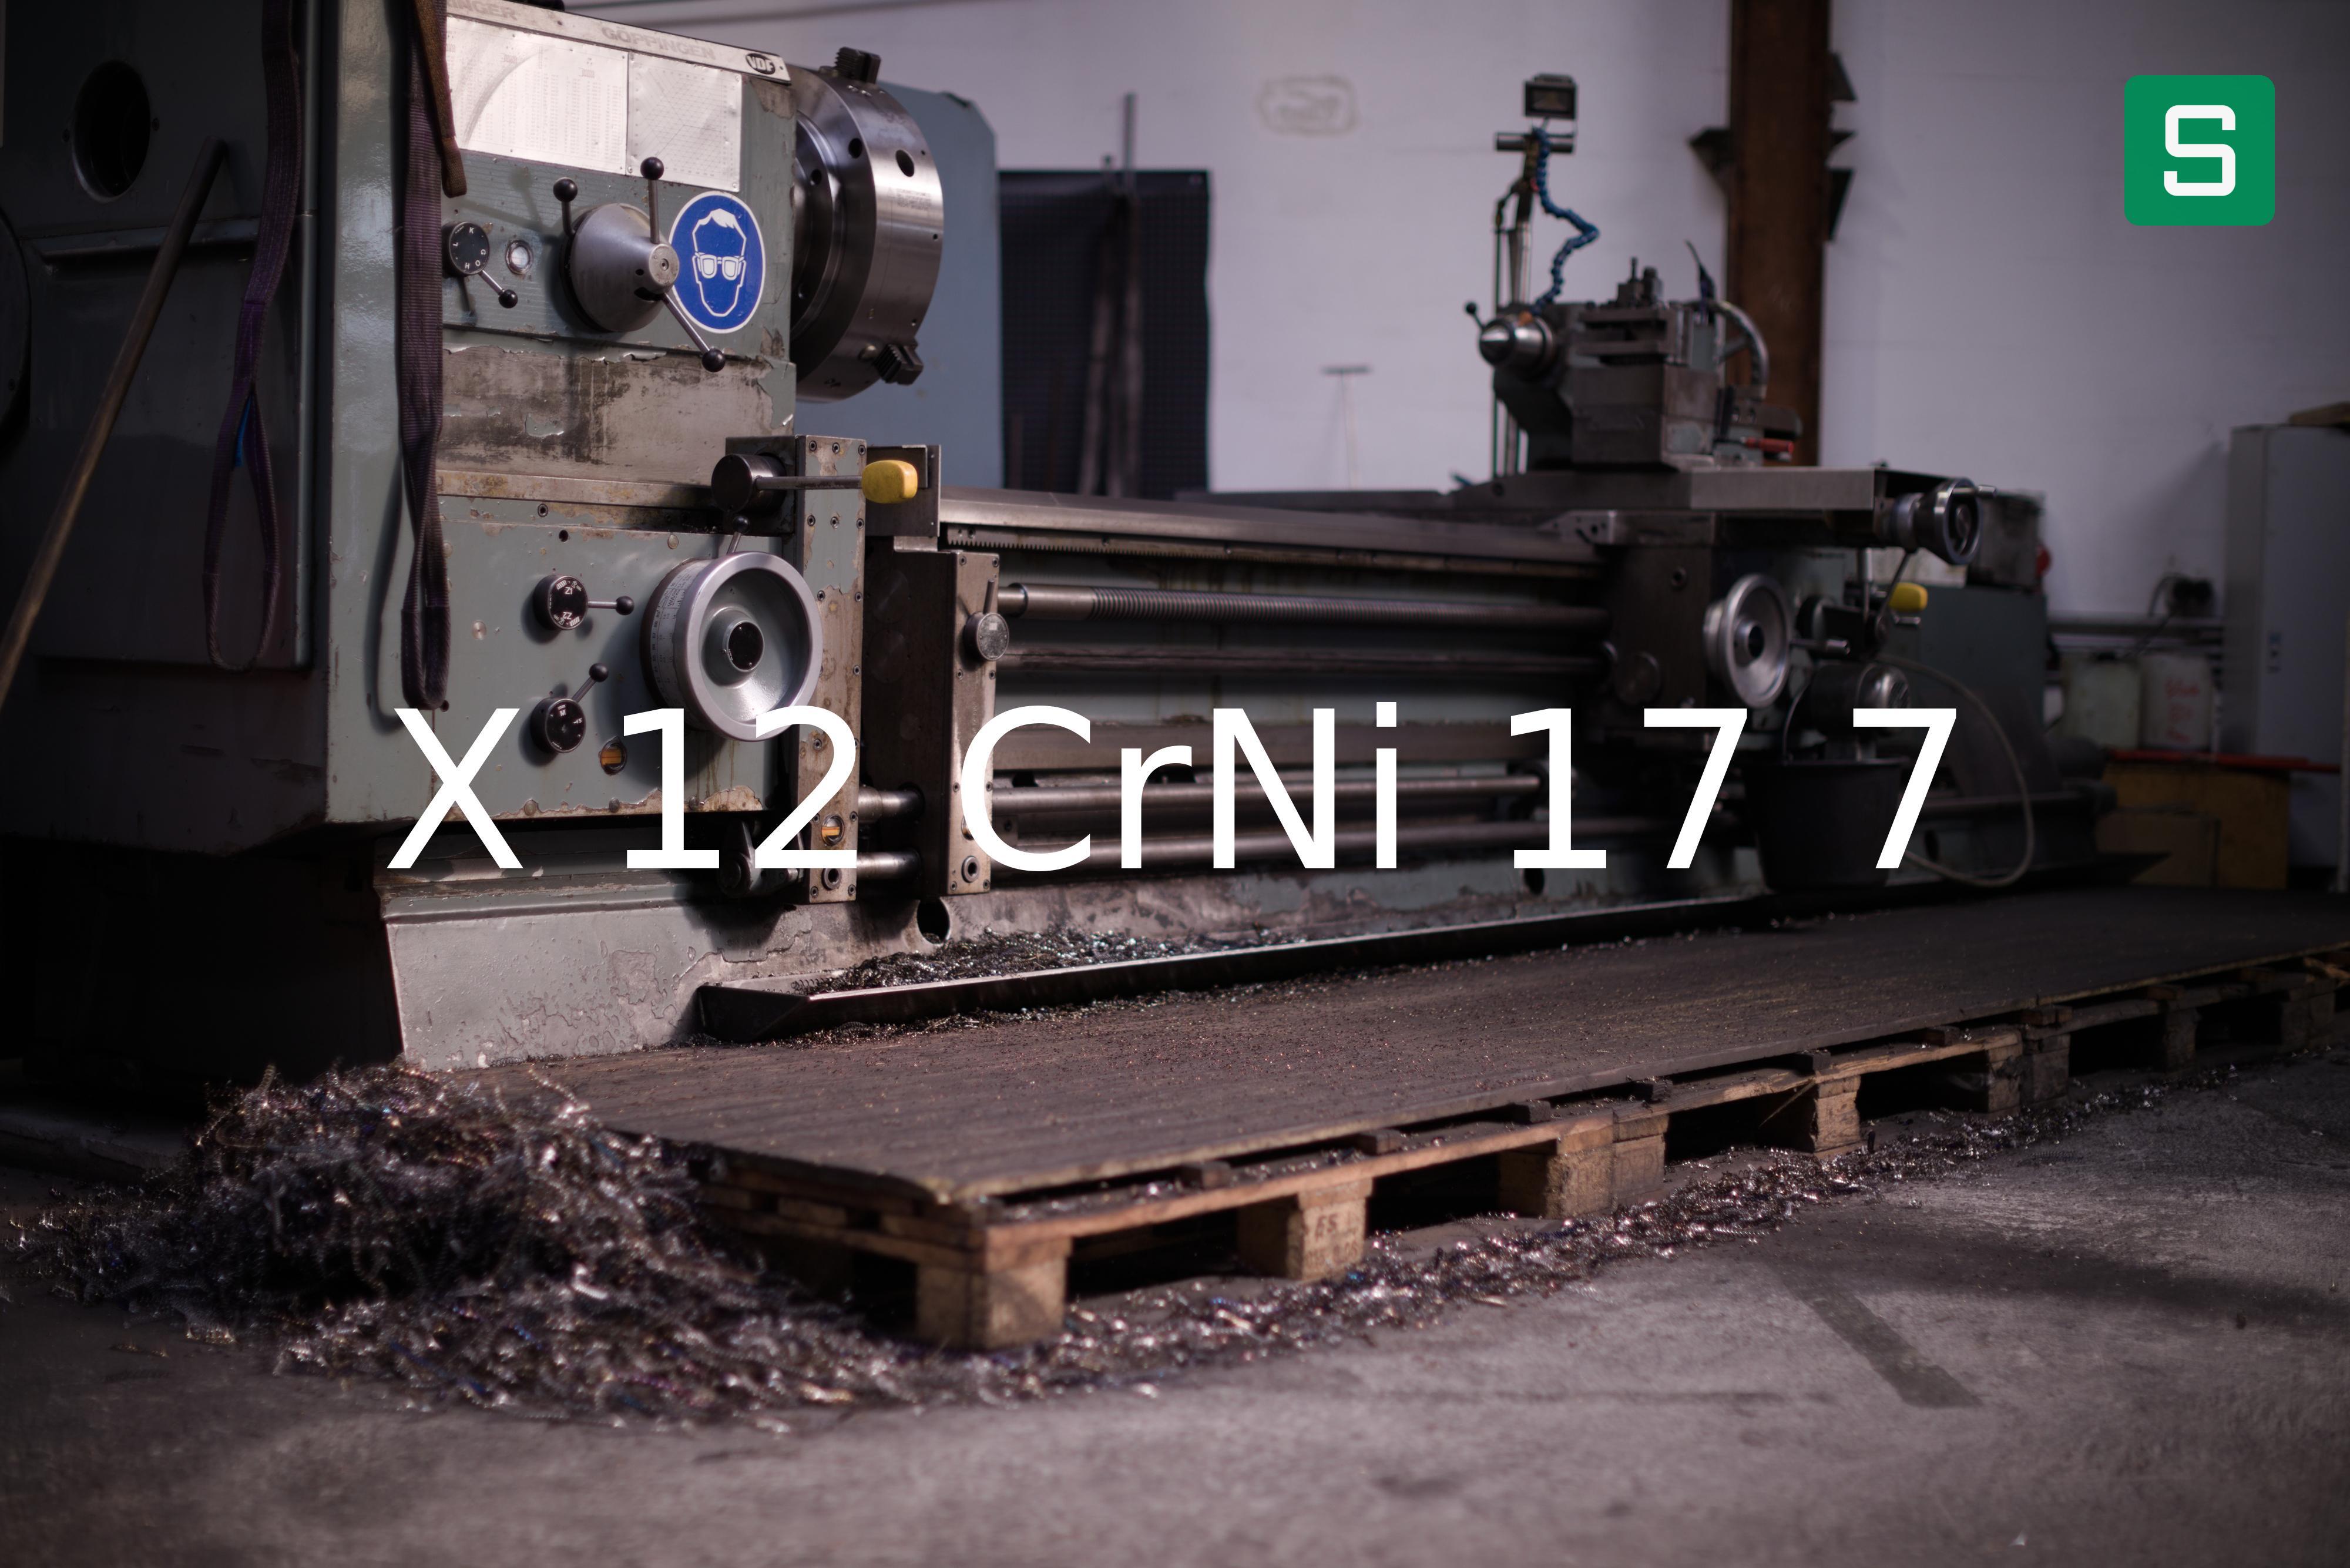 Steel Material: X 12 CrNi 17 7